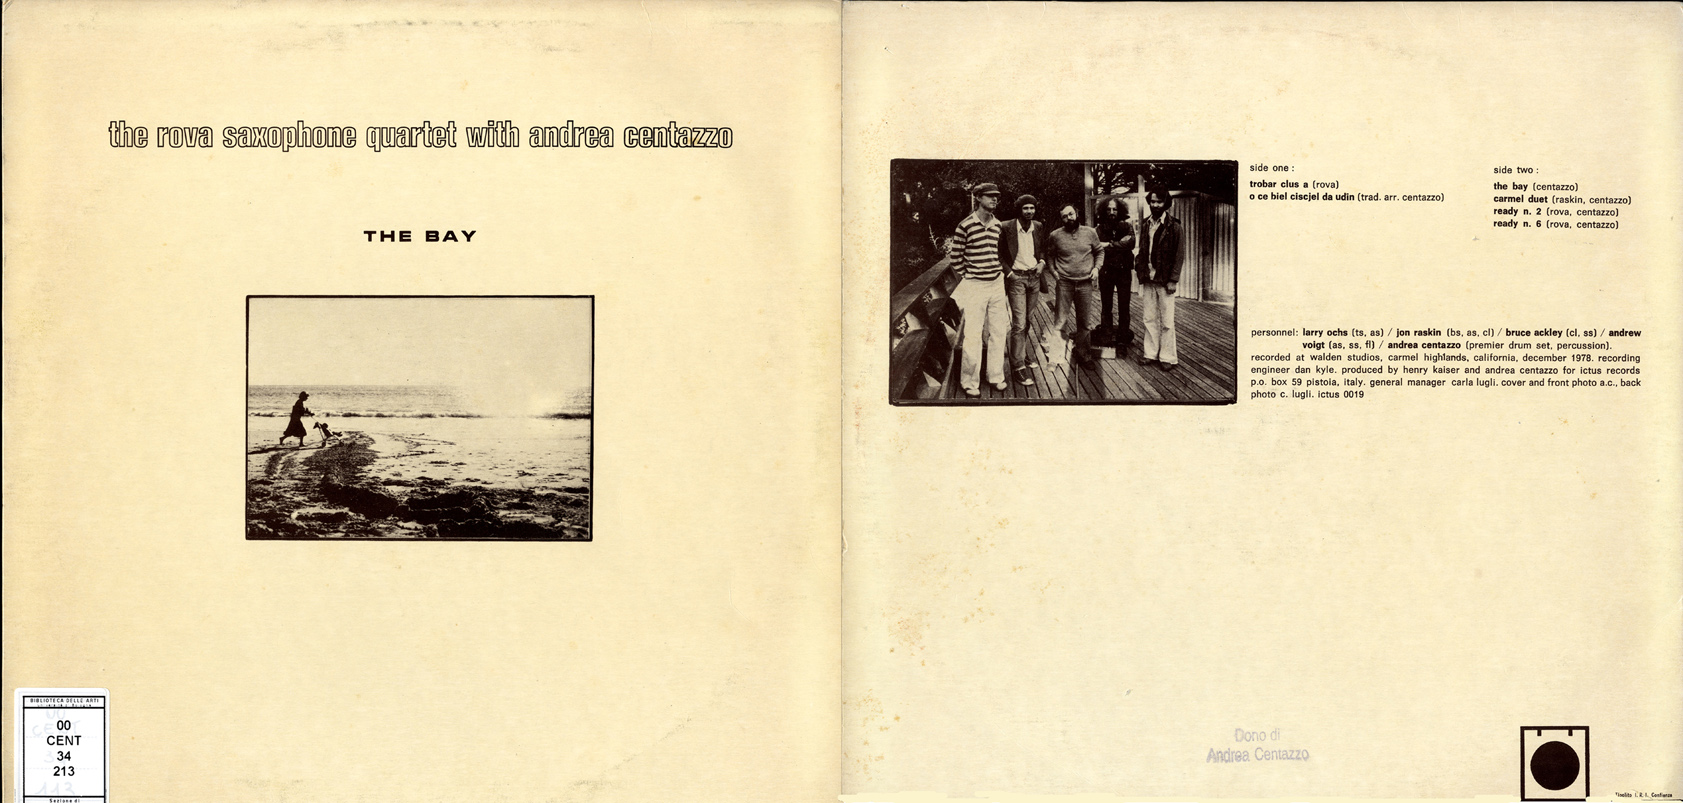 "The bay", LP, 1979